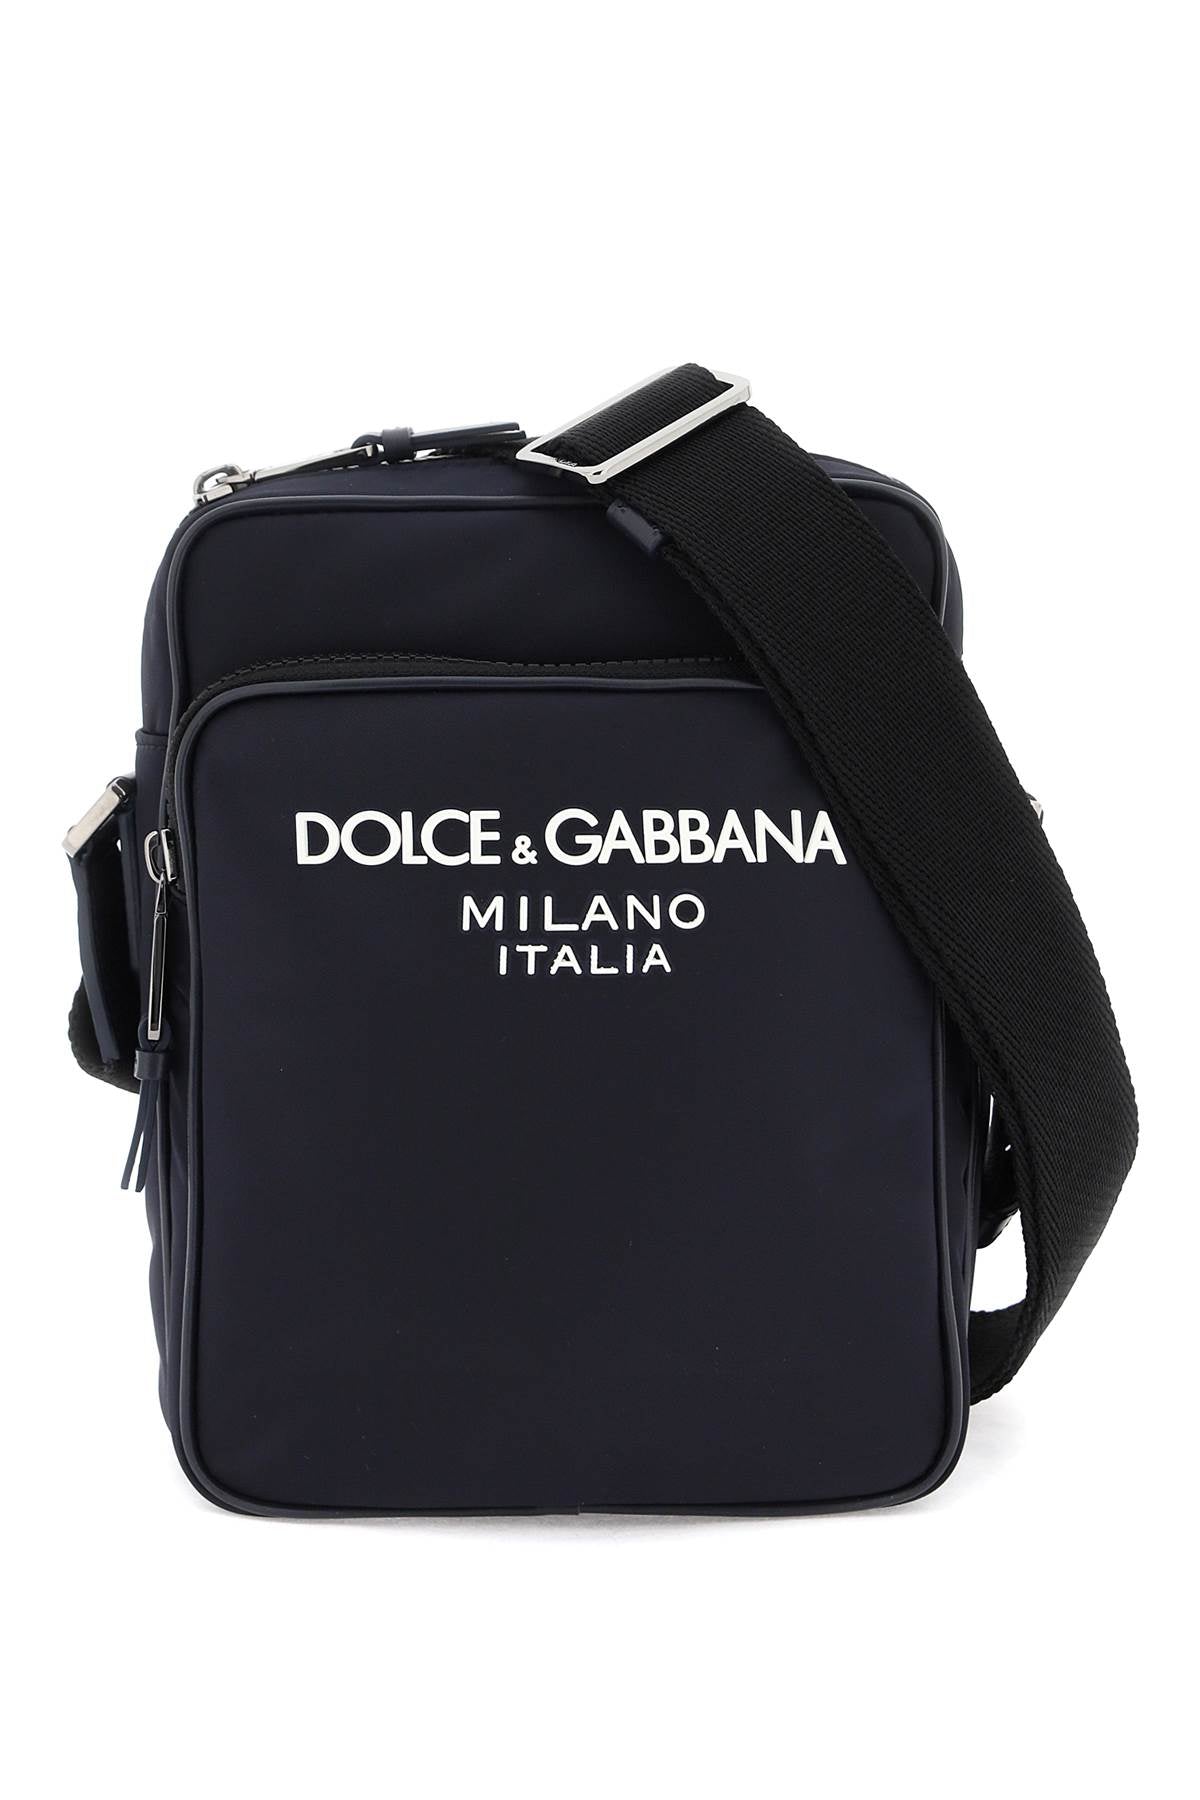 Dolce & gabbana nylon crossbody bag-0